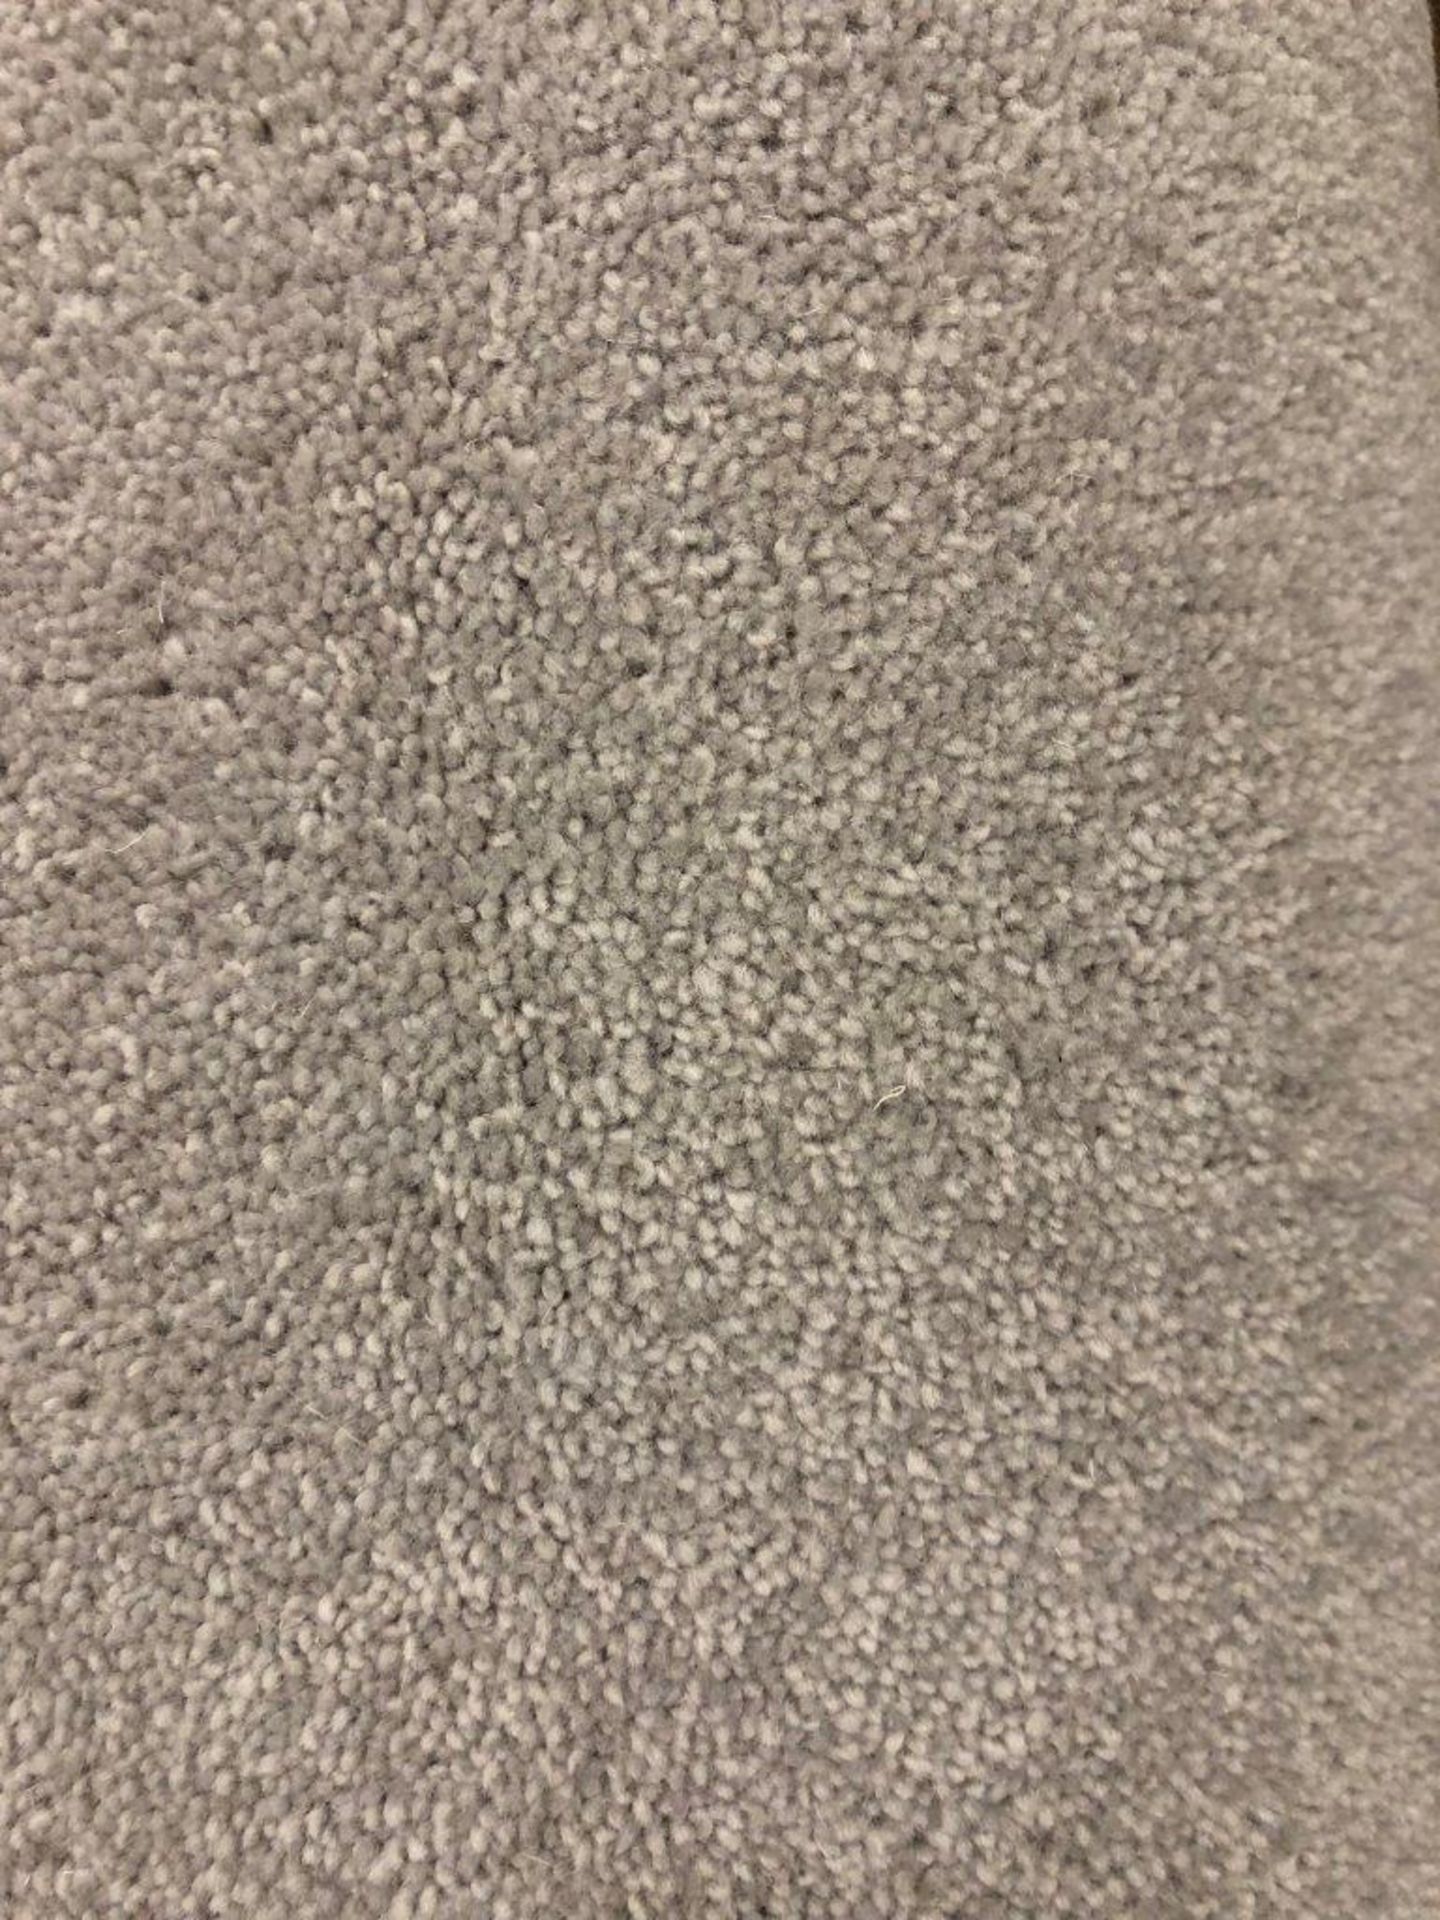 1 x Ryalux Carpet End Roll - Light Grey 2.4x1.55m2 - Image 3 of 3